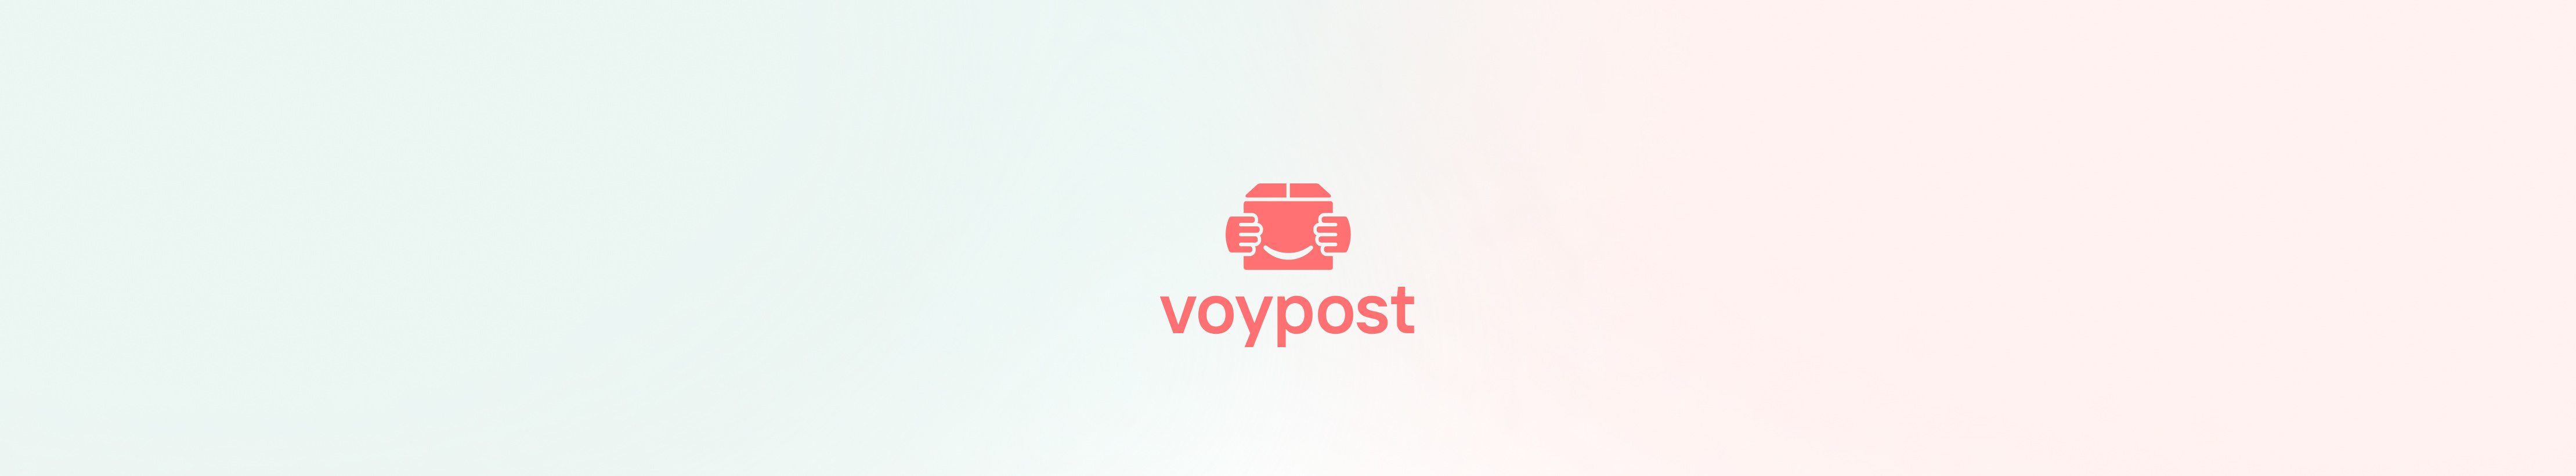 Voypost GmbH のプロファイルバナー